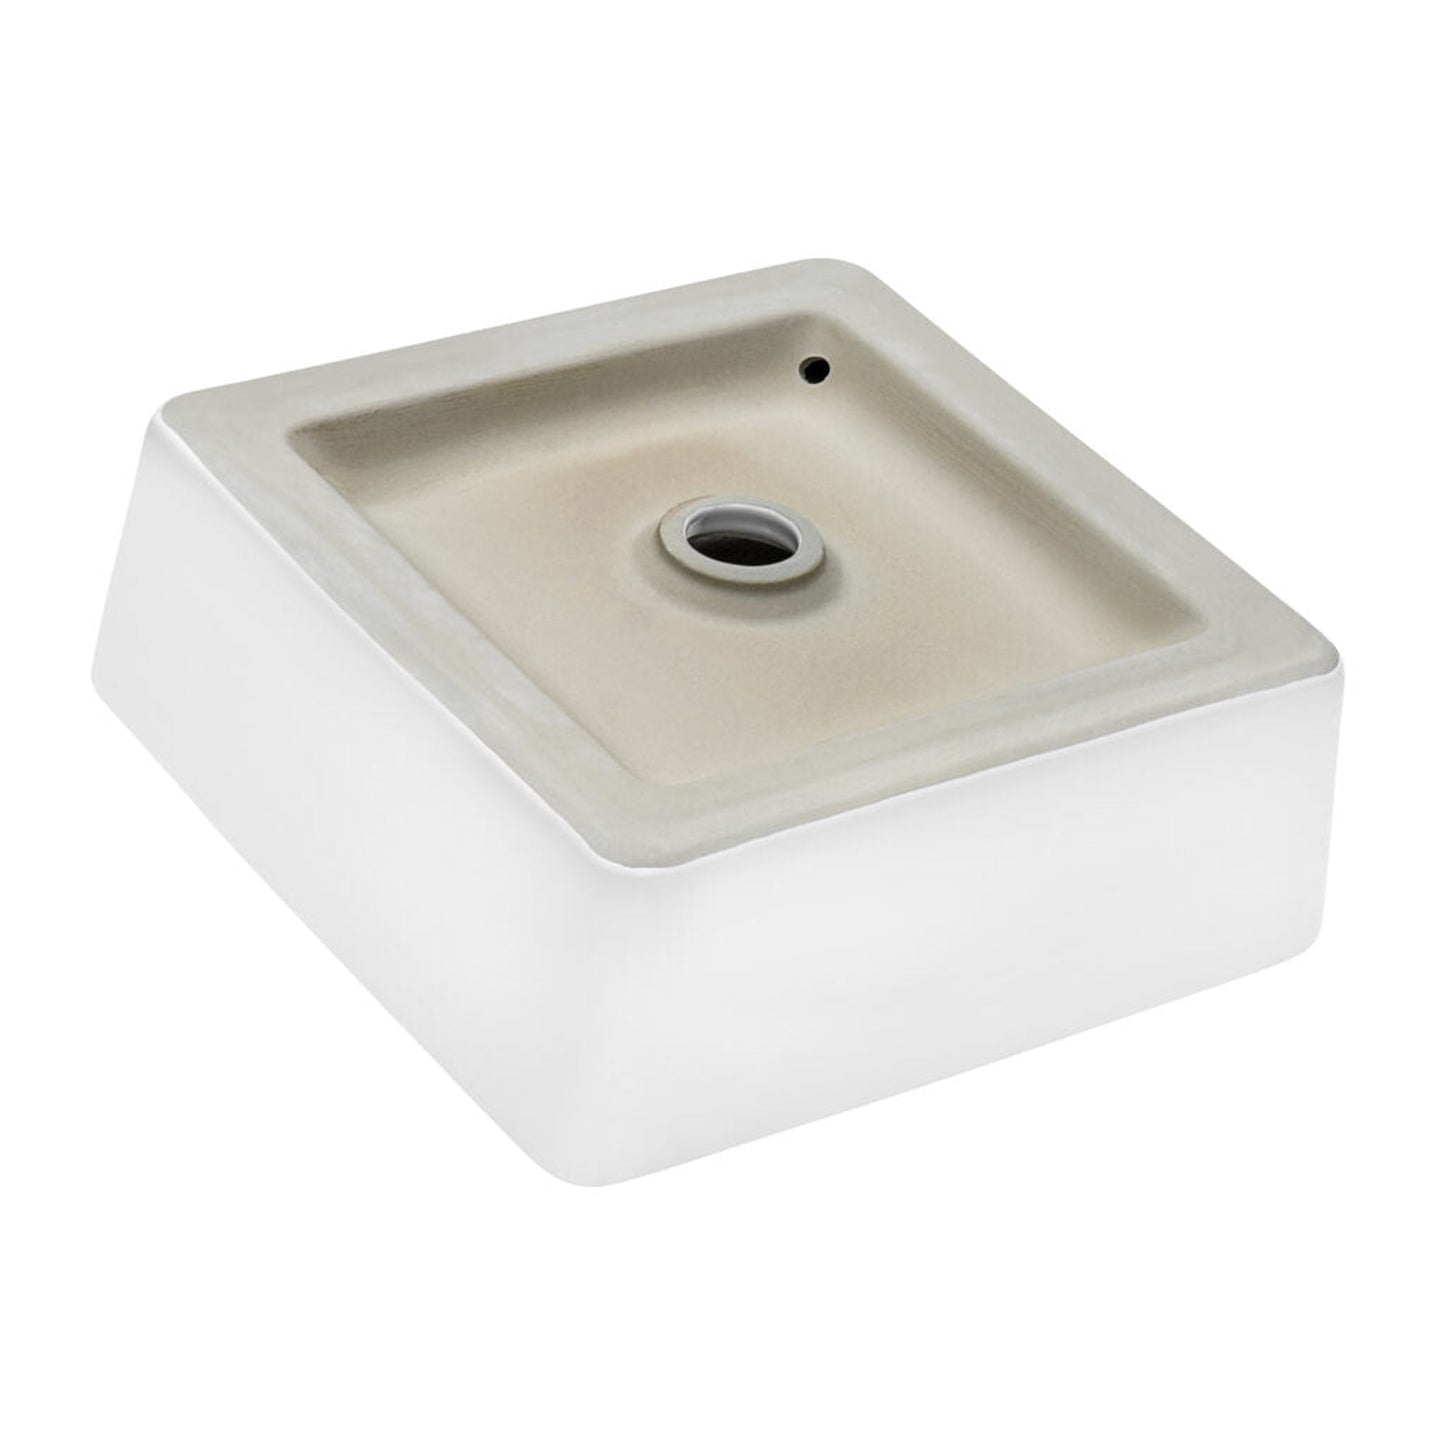 Ruvati Vista 15” x 15” Square White Above Counter Porcelain Ceramic Bathroom Vessel Sink